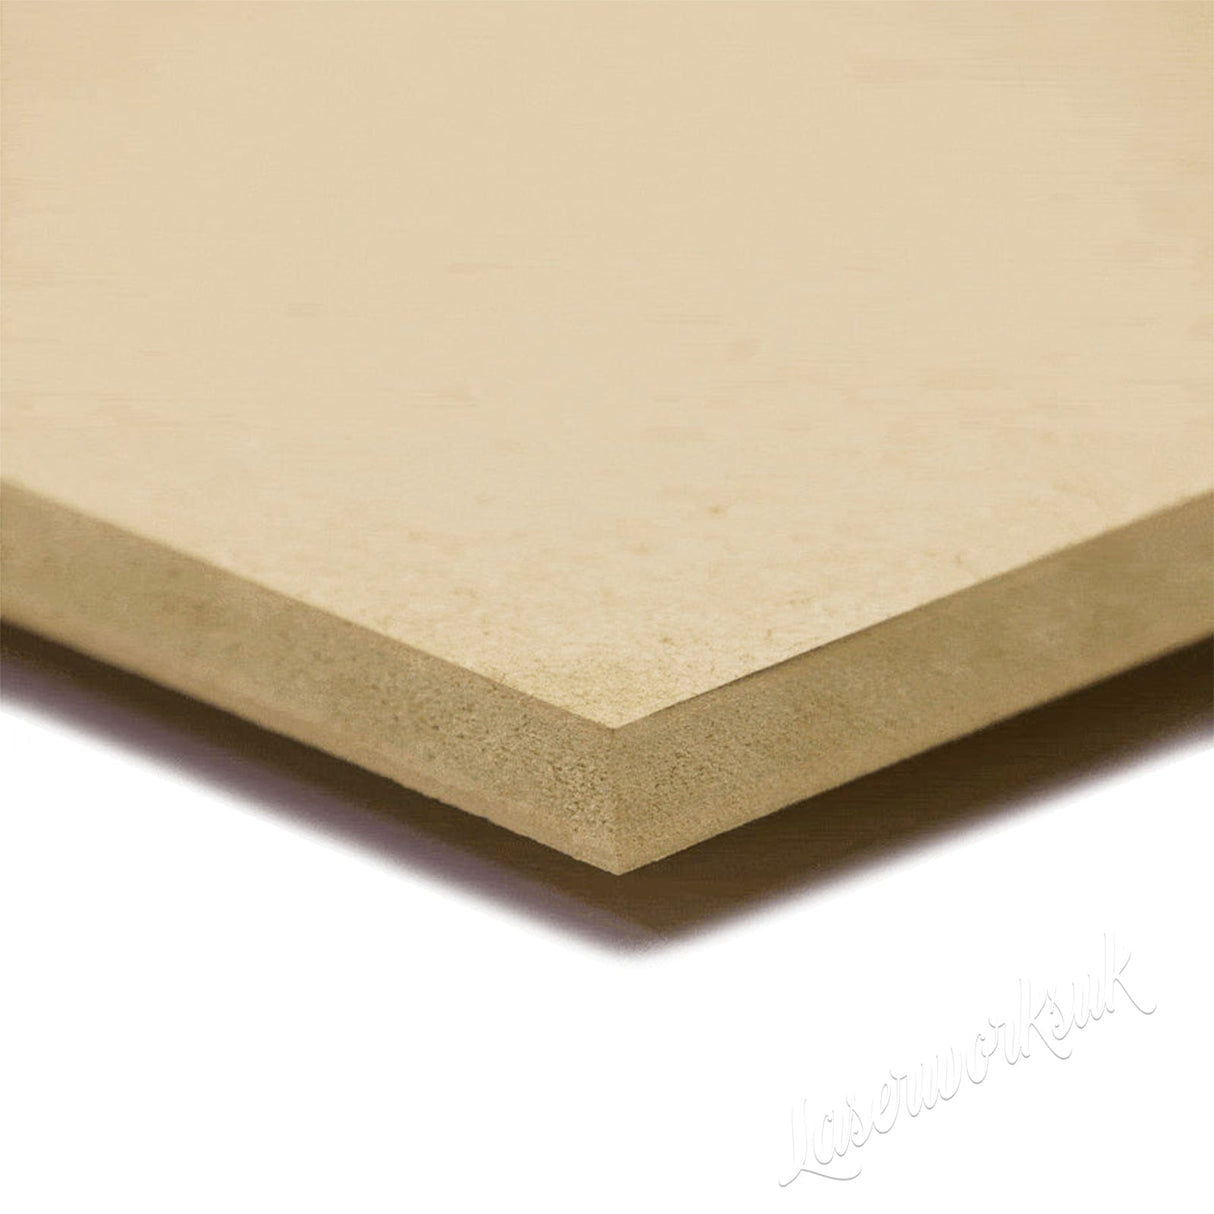 Freestanding Square Shapes, 18mm Thick Wooden MDF Blanks - Laserworksuk